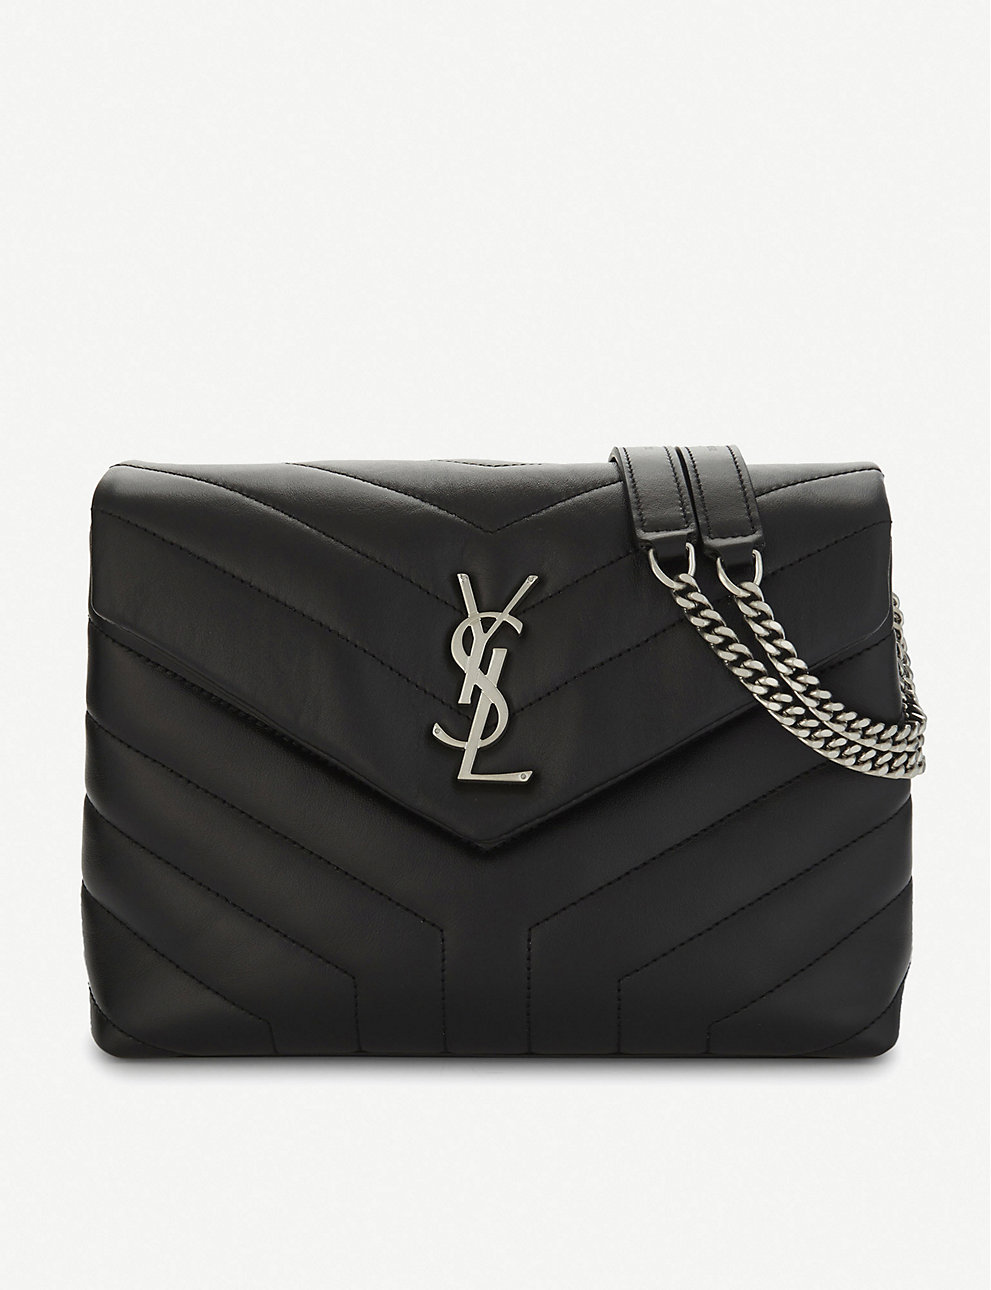 SAINT Loulou small leather cross-body BLACK – Quality Yves Saint Laurent Bags Shop